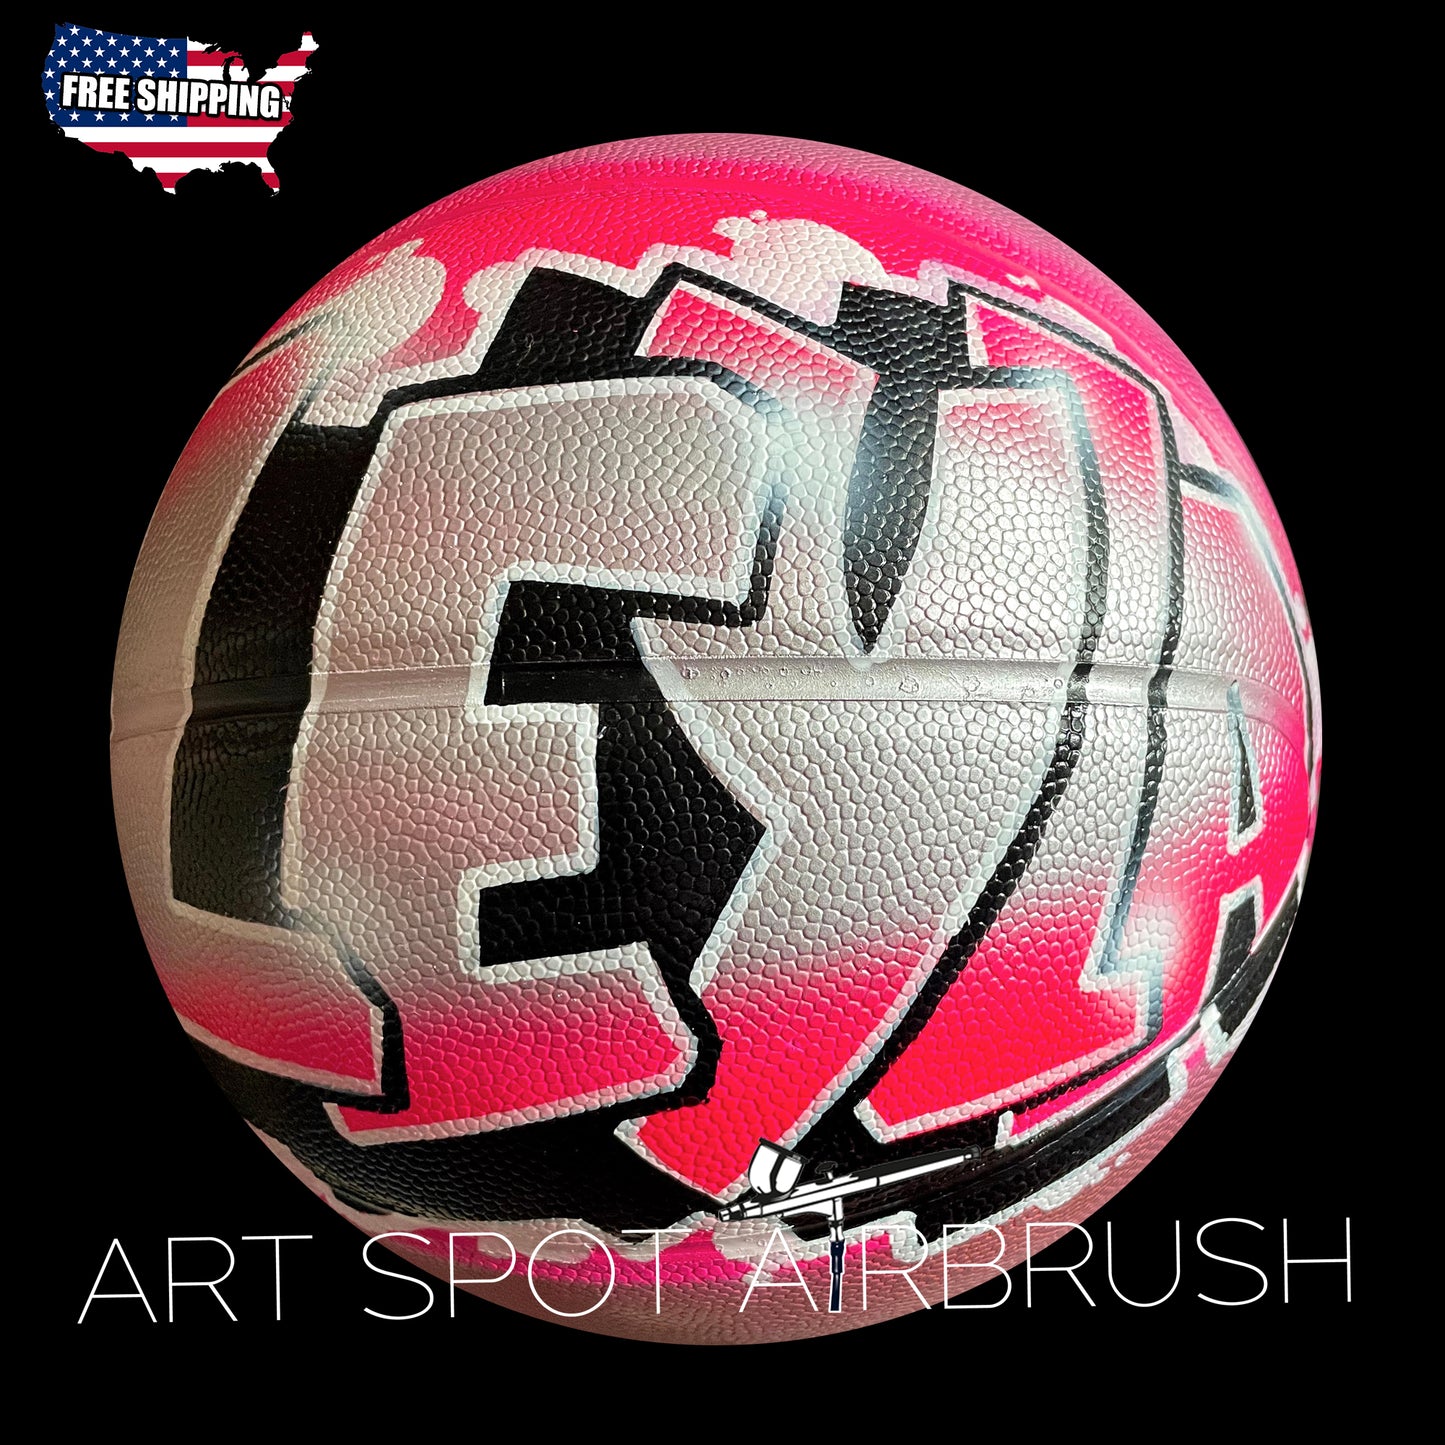 Basketball with Custom Artwork